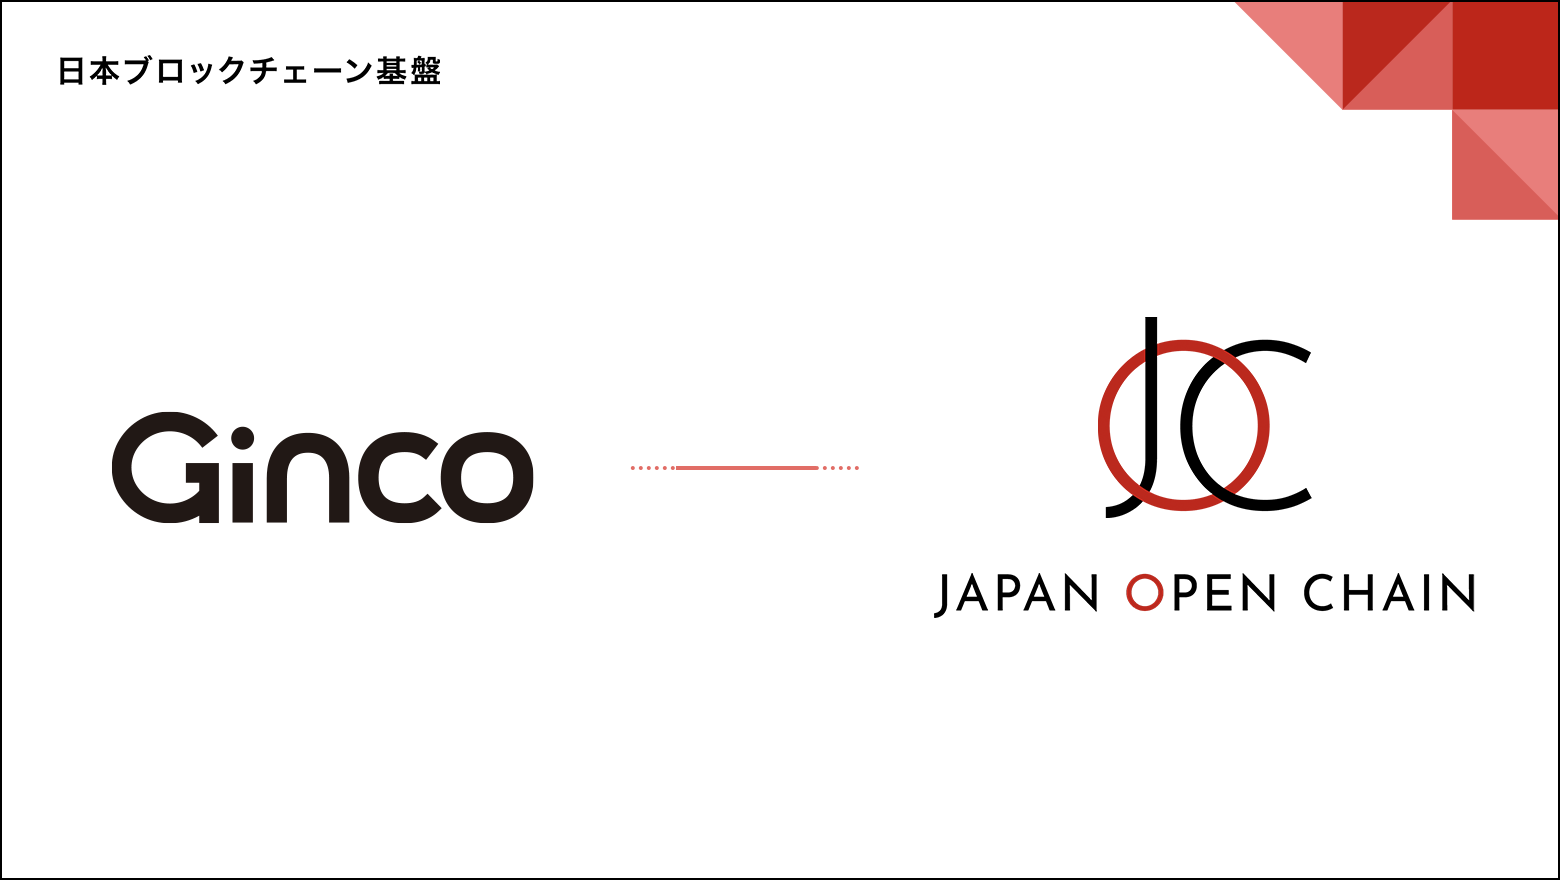 Japan Open Chain、業務用暗号資産ウォレット「Ginco Enterprise Wallet」に対応